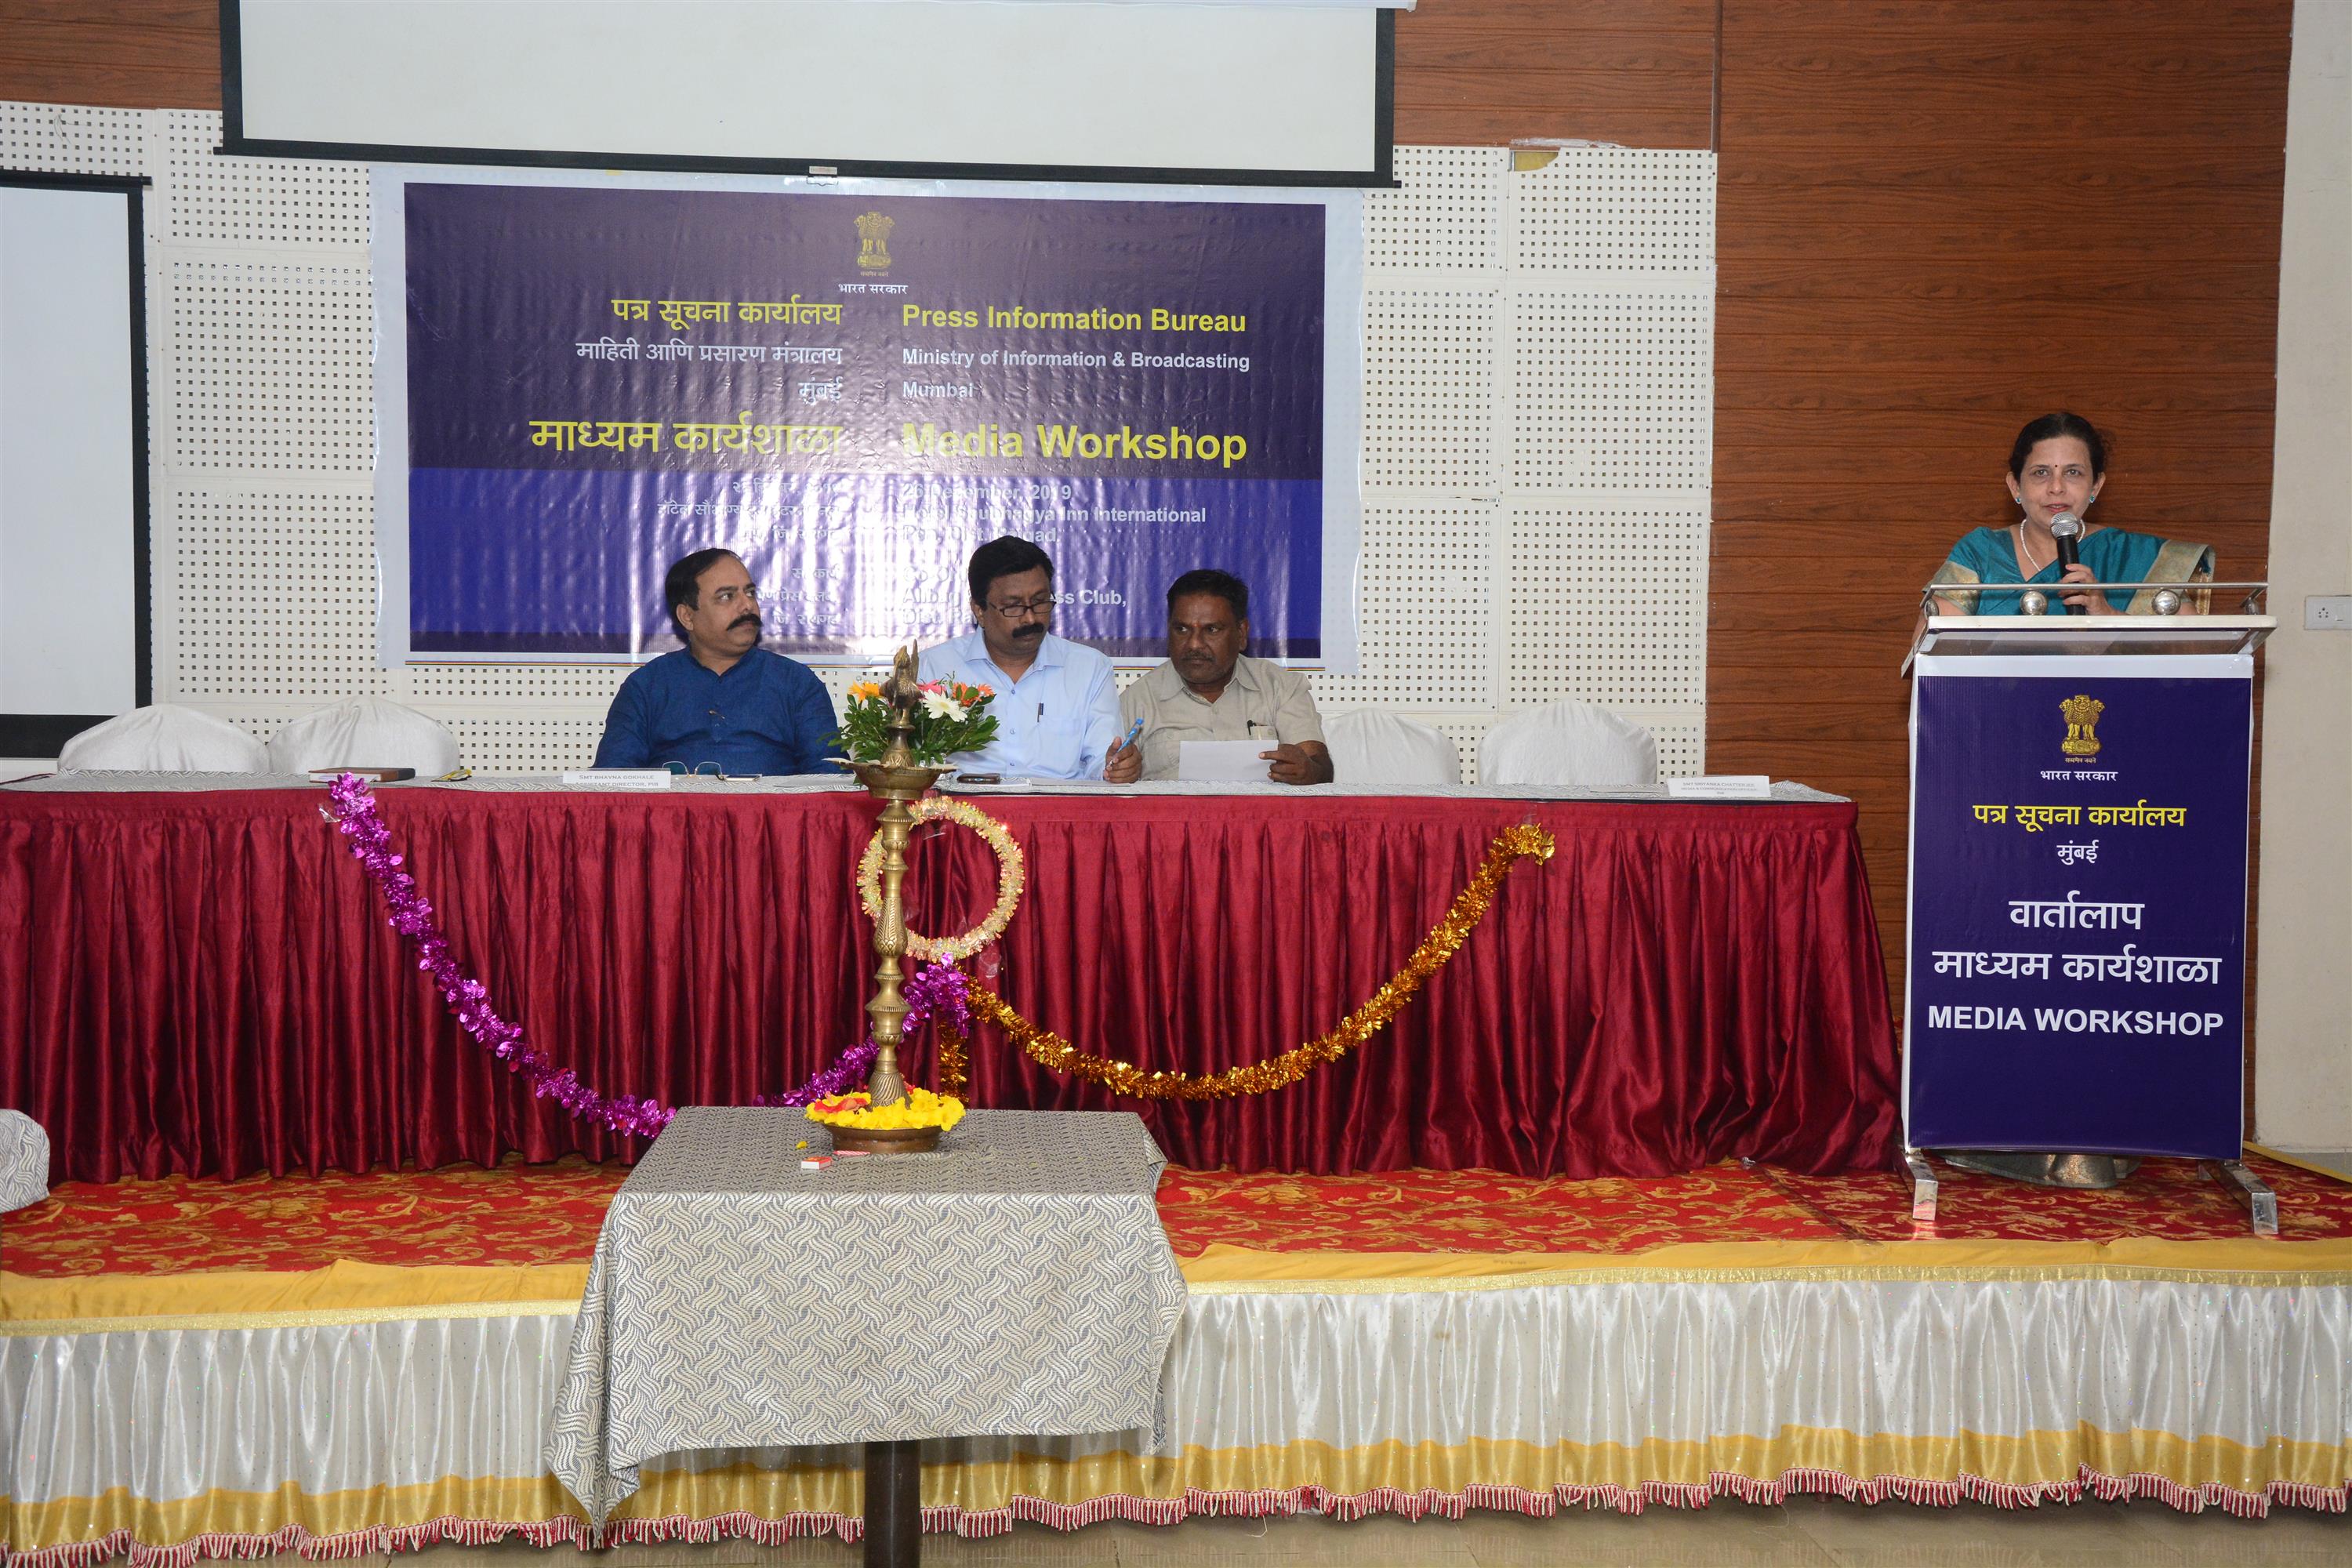 Vartalap - Media Workshop organised by Press Information Bureau, Mumbai taking place at Pen in Raigad district on 26.12.2019